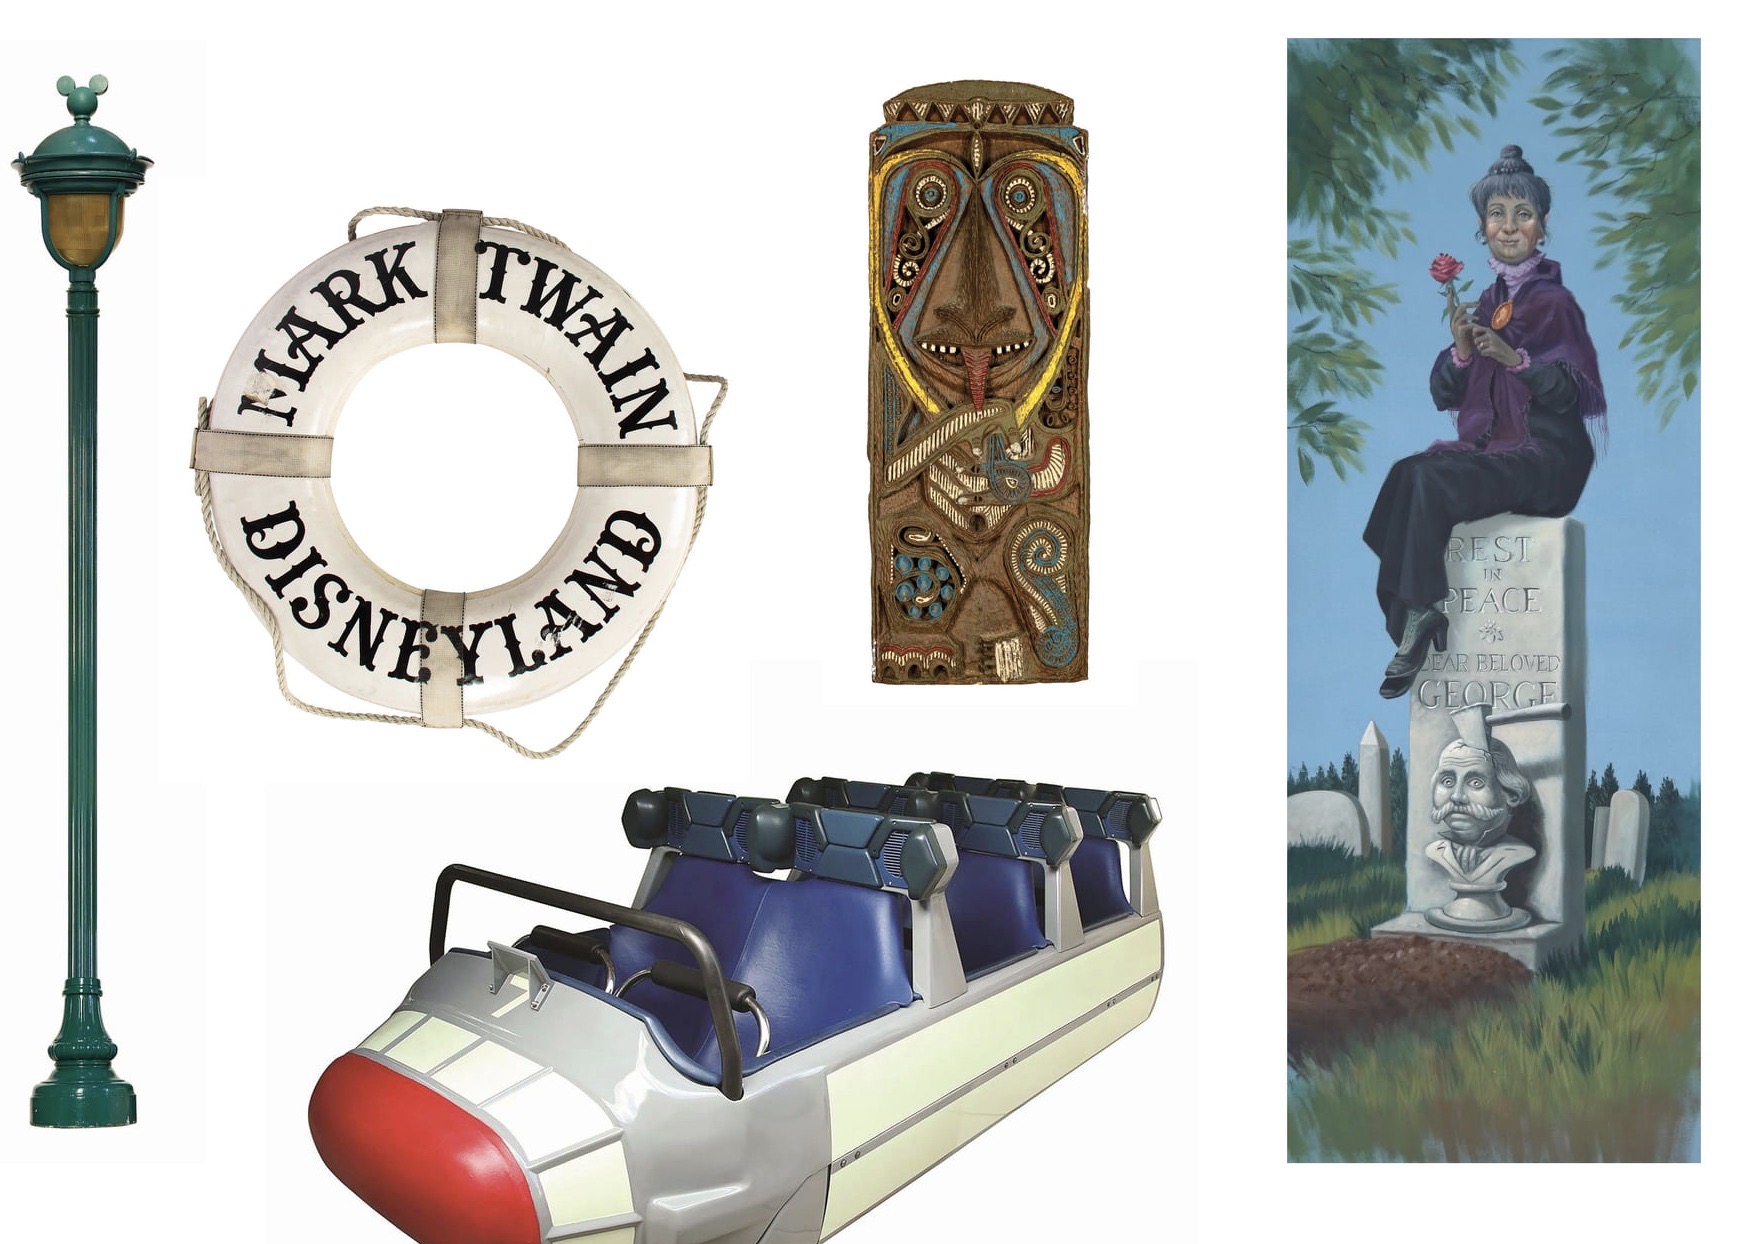 Disneyland Auction, Van Eaton Galleries, Mickey-ear lamppost, Tiki Room mask, Space Mountain ride vehicle, Haunted Mansion stretching portrait